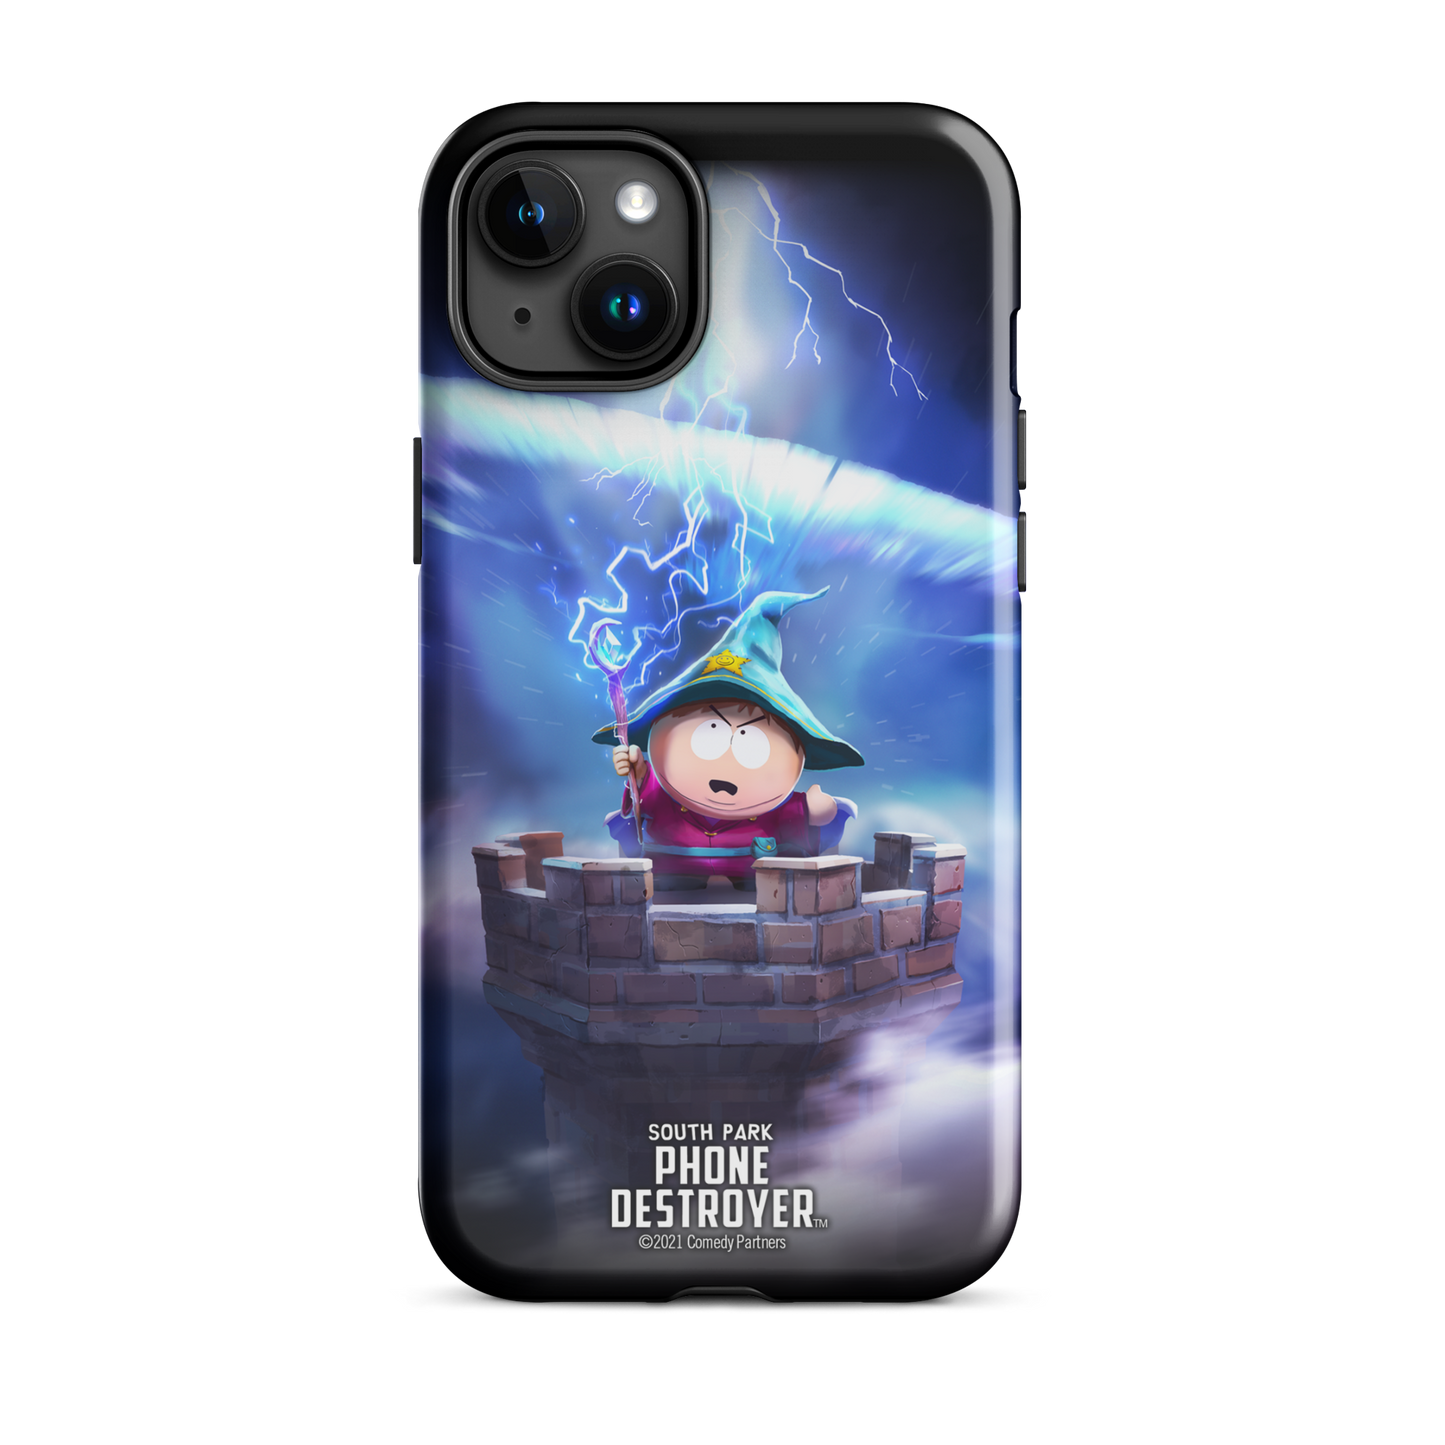 South Park Cartman Grand Wizard Tough Telefon Fall - iPhone